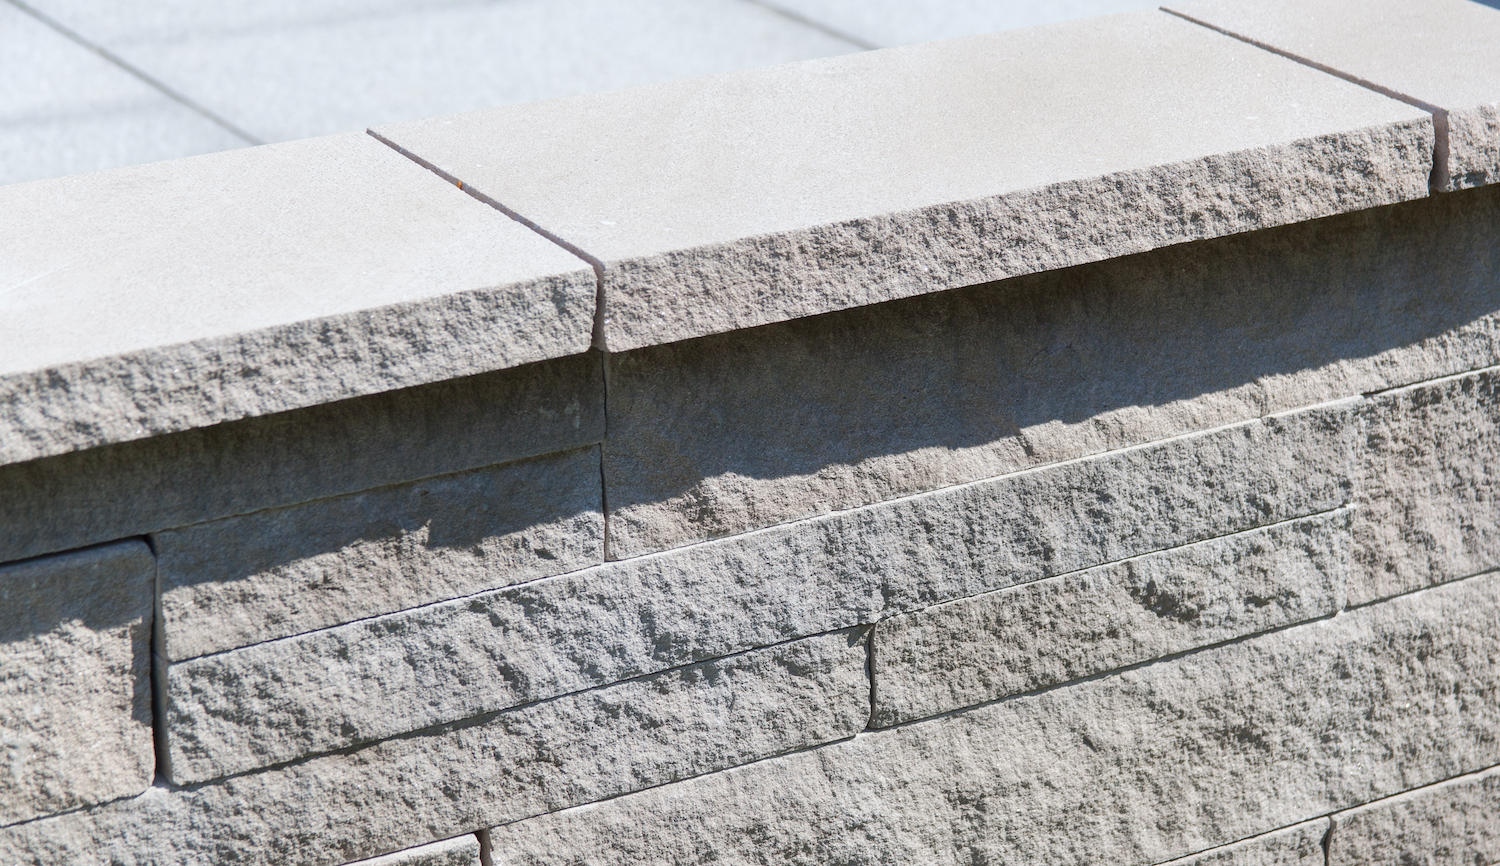 HIGH RESOLUTION TEXTURES: Concrete wall smooth pillar texture